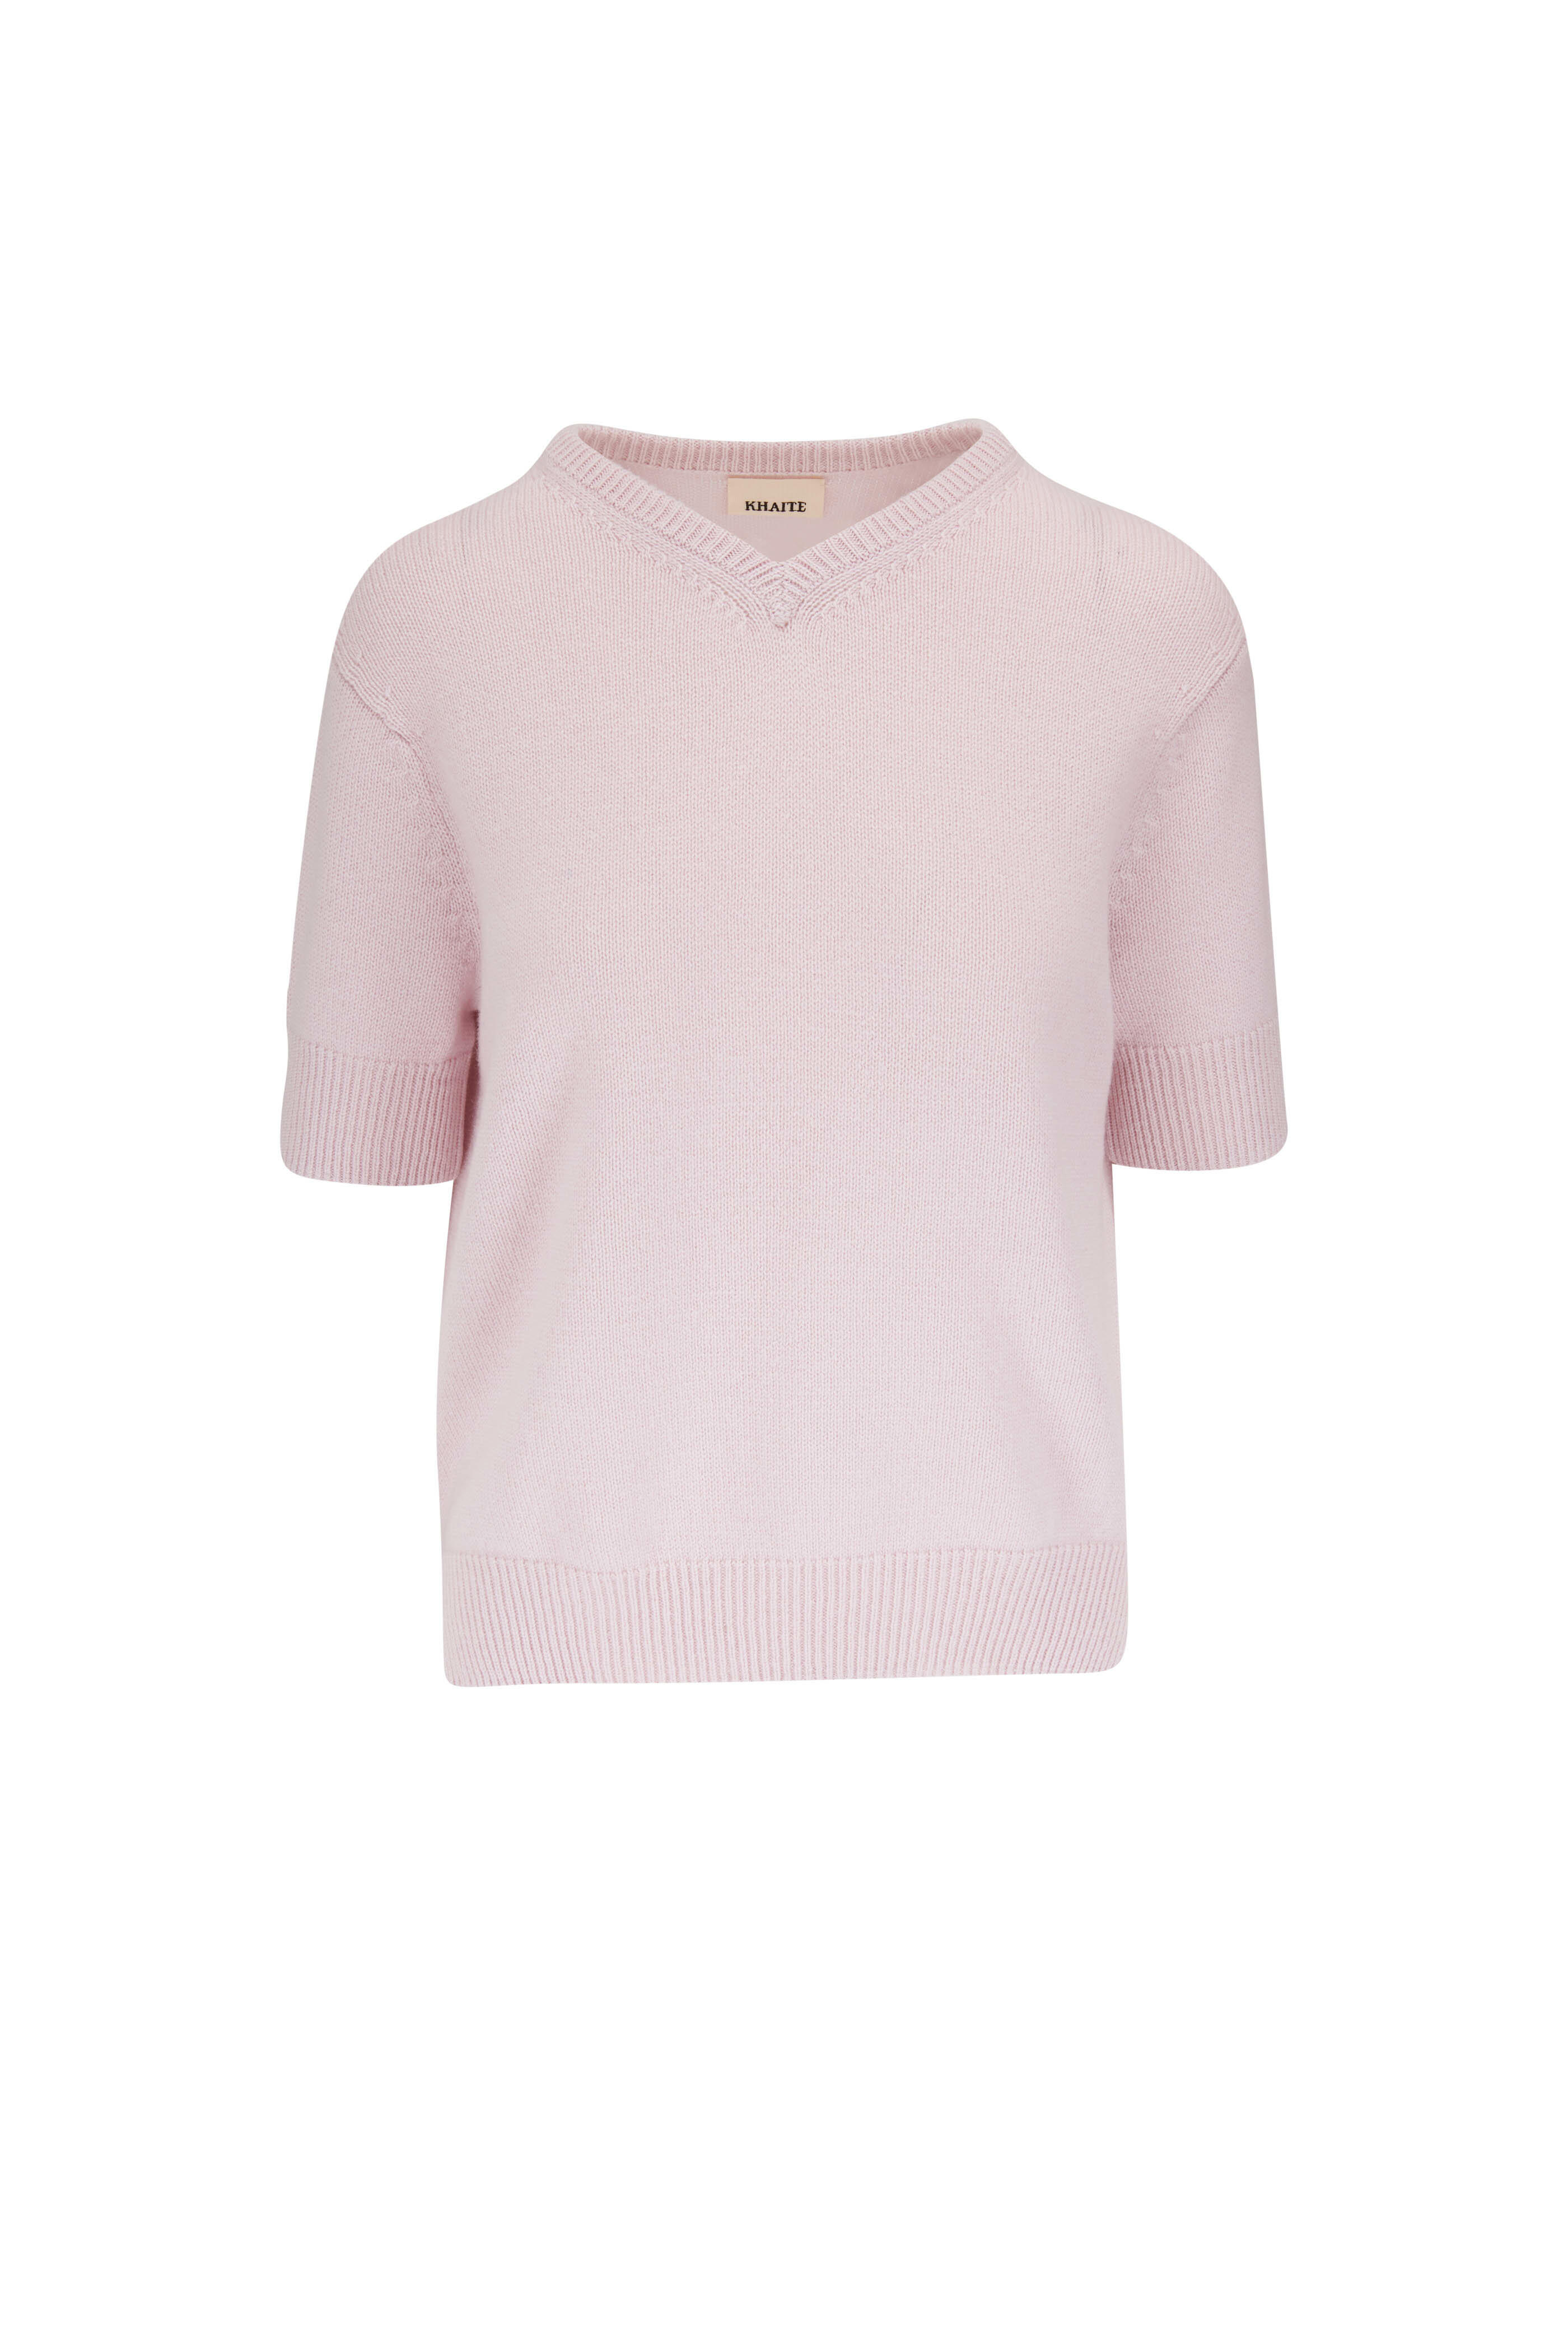 Khaite - Veronica Dahlia Pink Short Sleeve Sweater